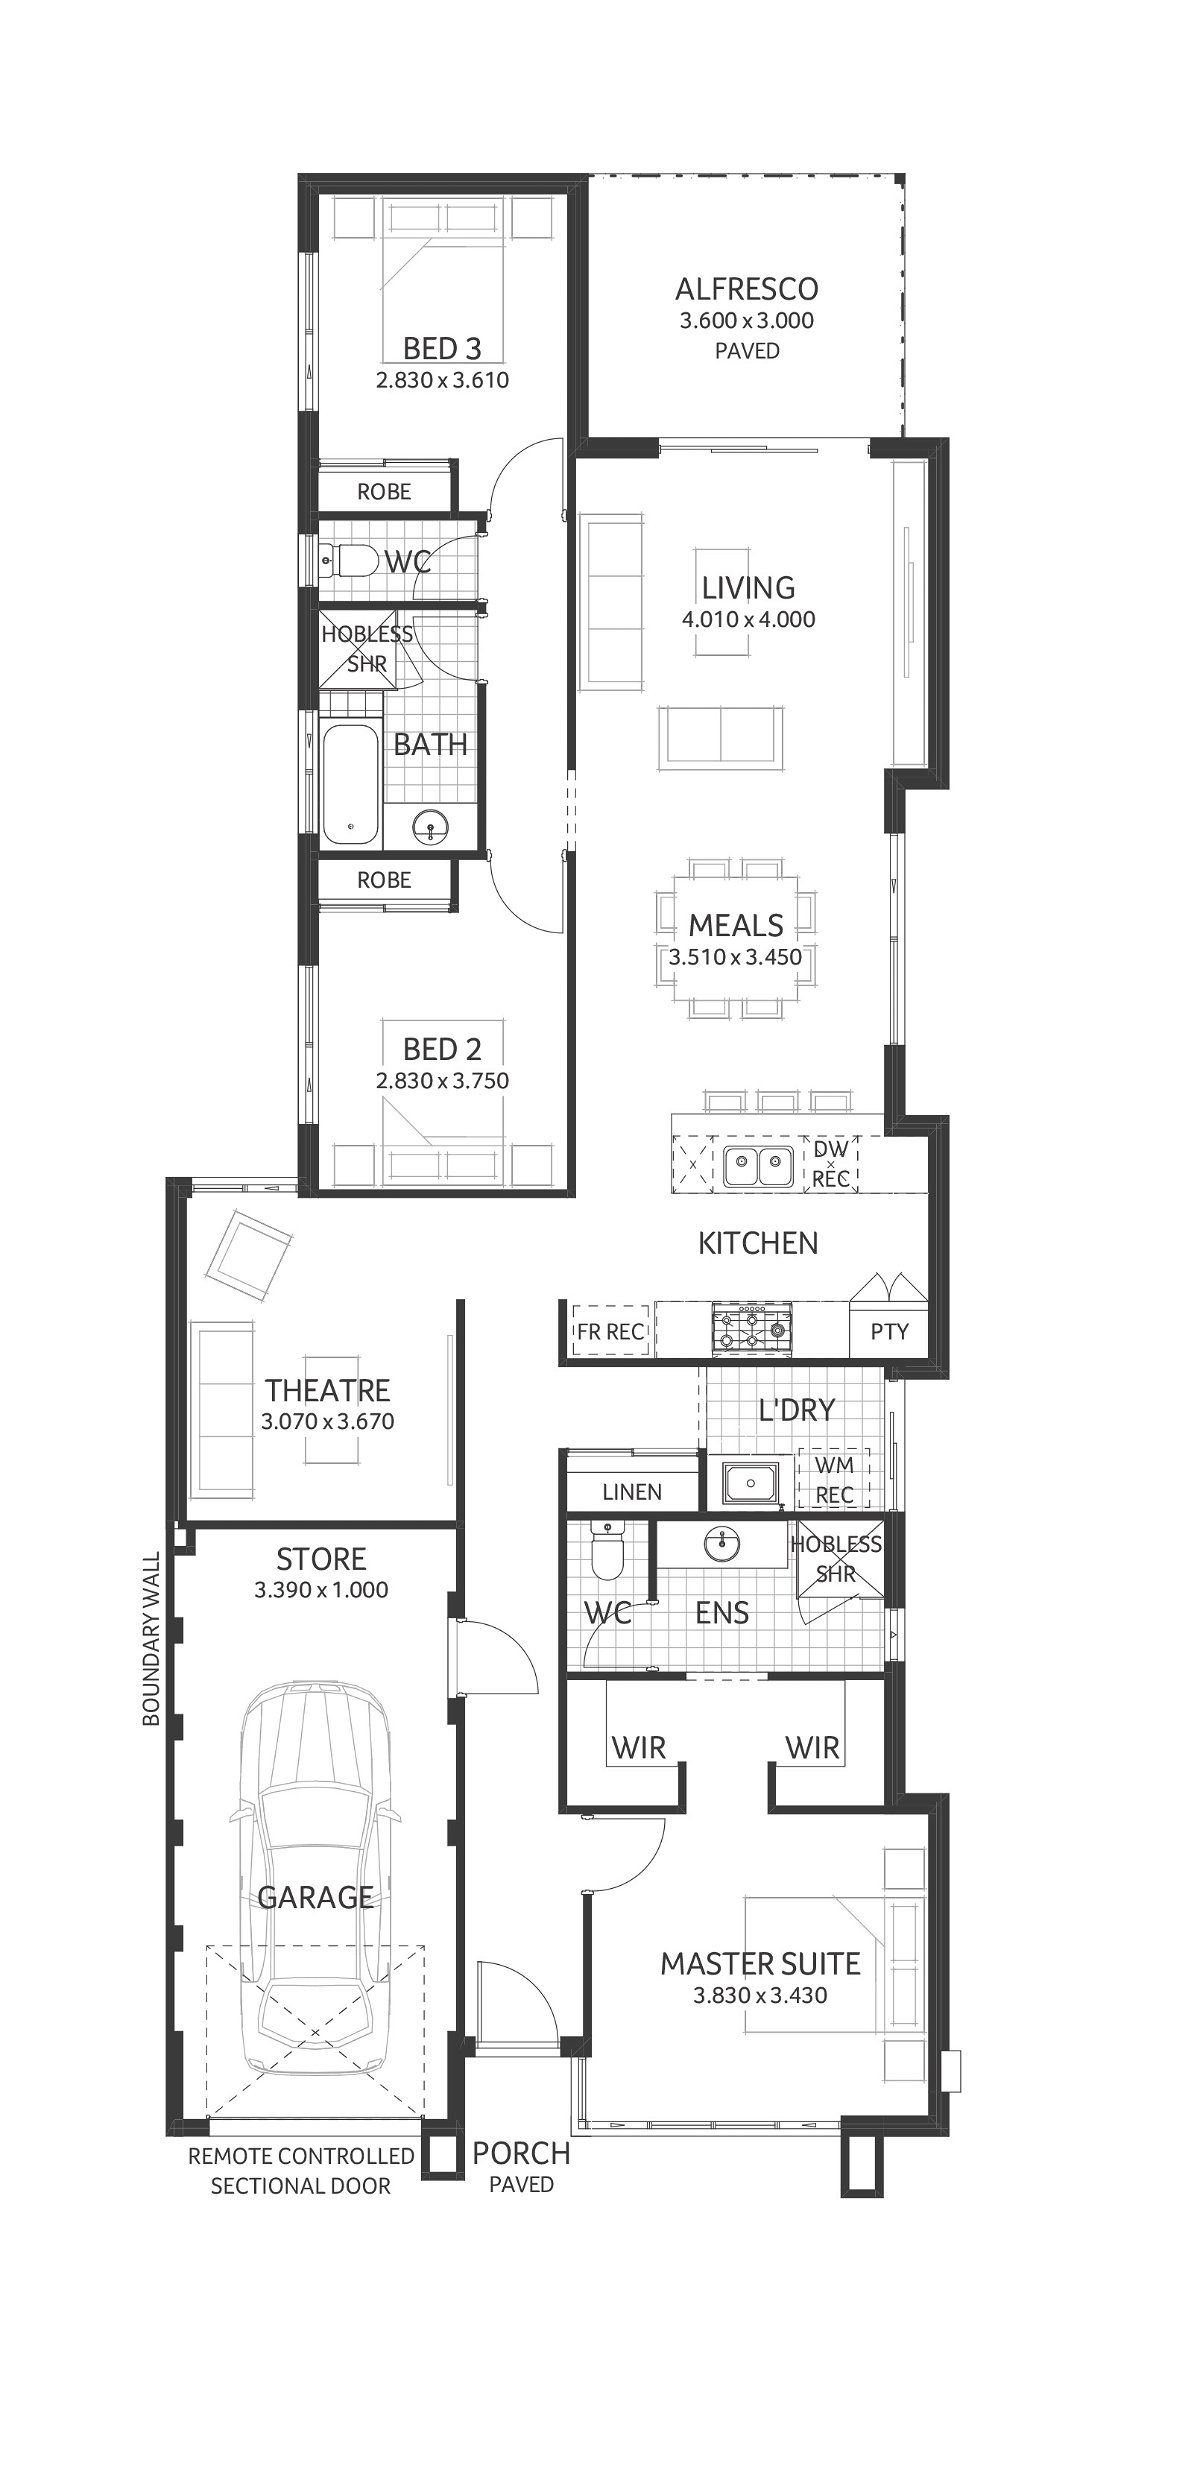 Plunkett Homes - Como | Lifestyle - Floorplan - Como Lifestyle Contemporary Marketing Plan A3Jpg